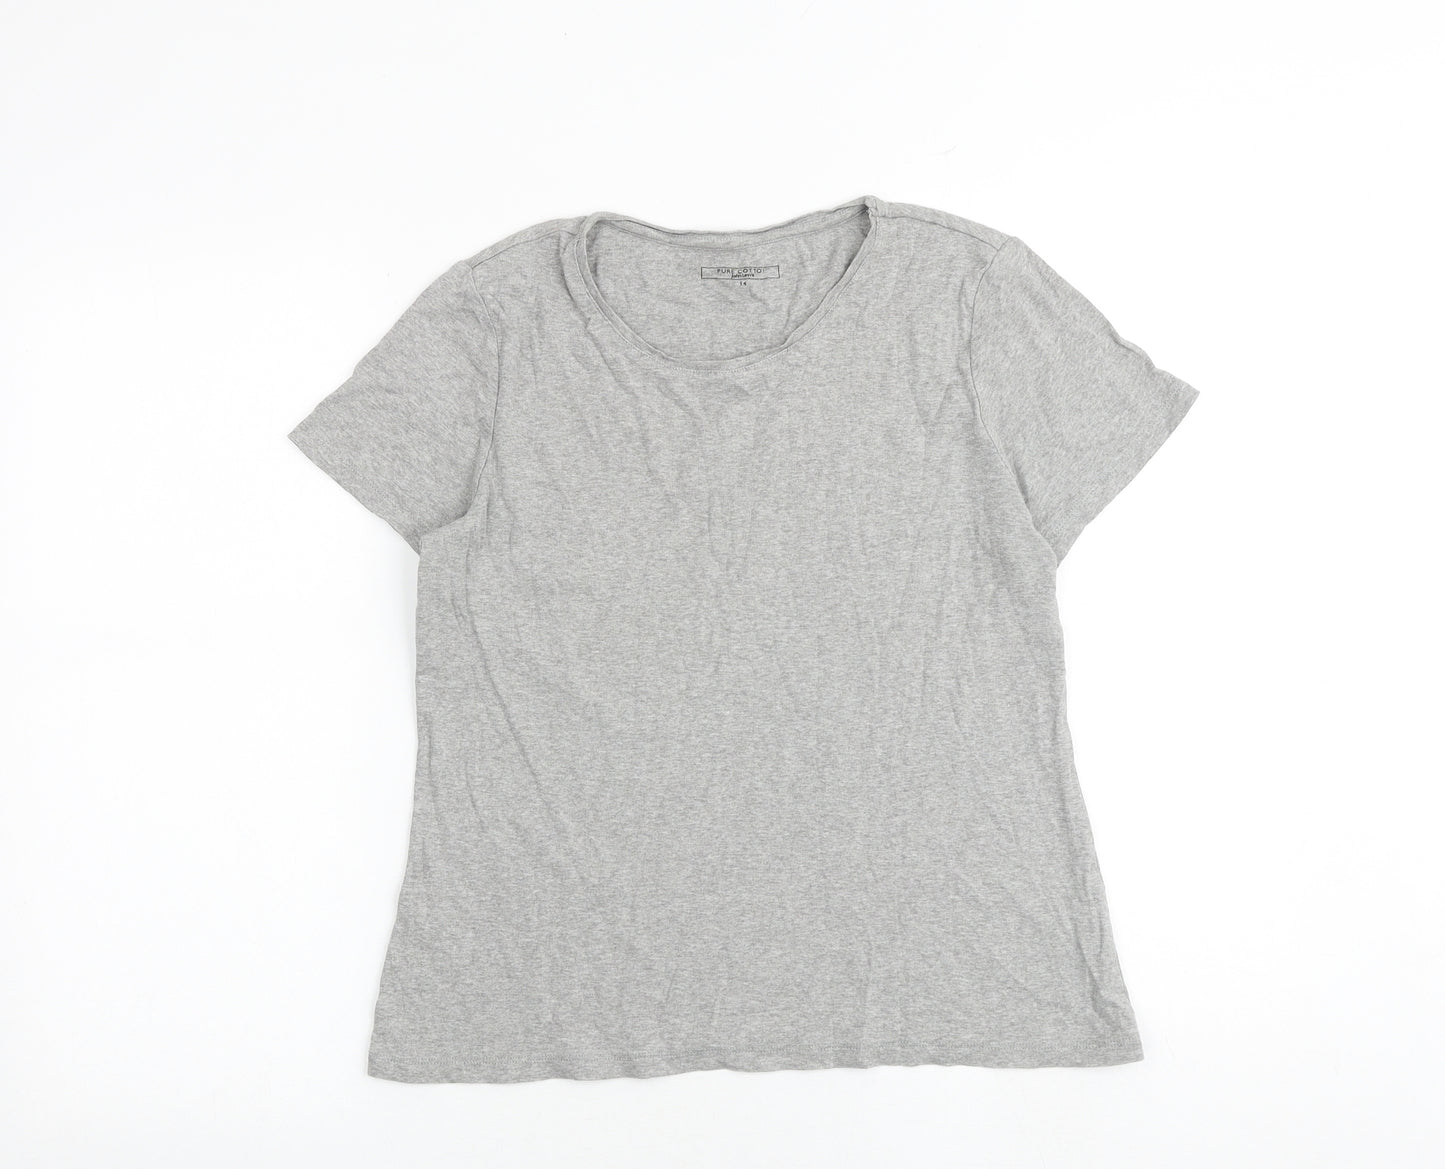 John Lewis Womens Grey 100% Cotton Basic T-Shirt Size 14 Round Neck